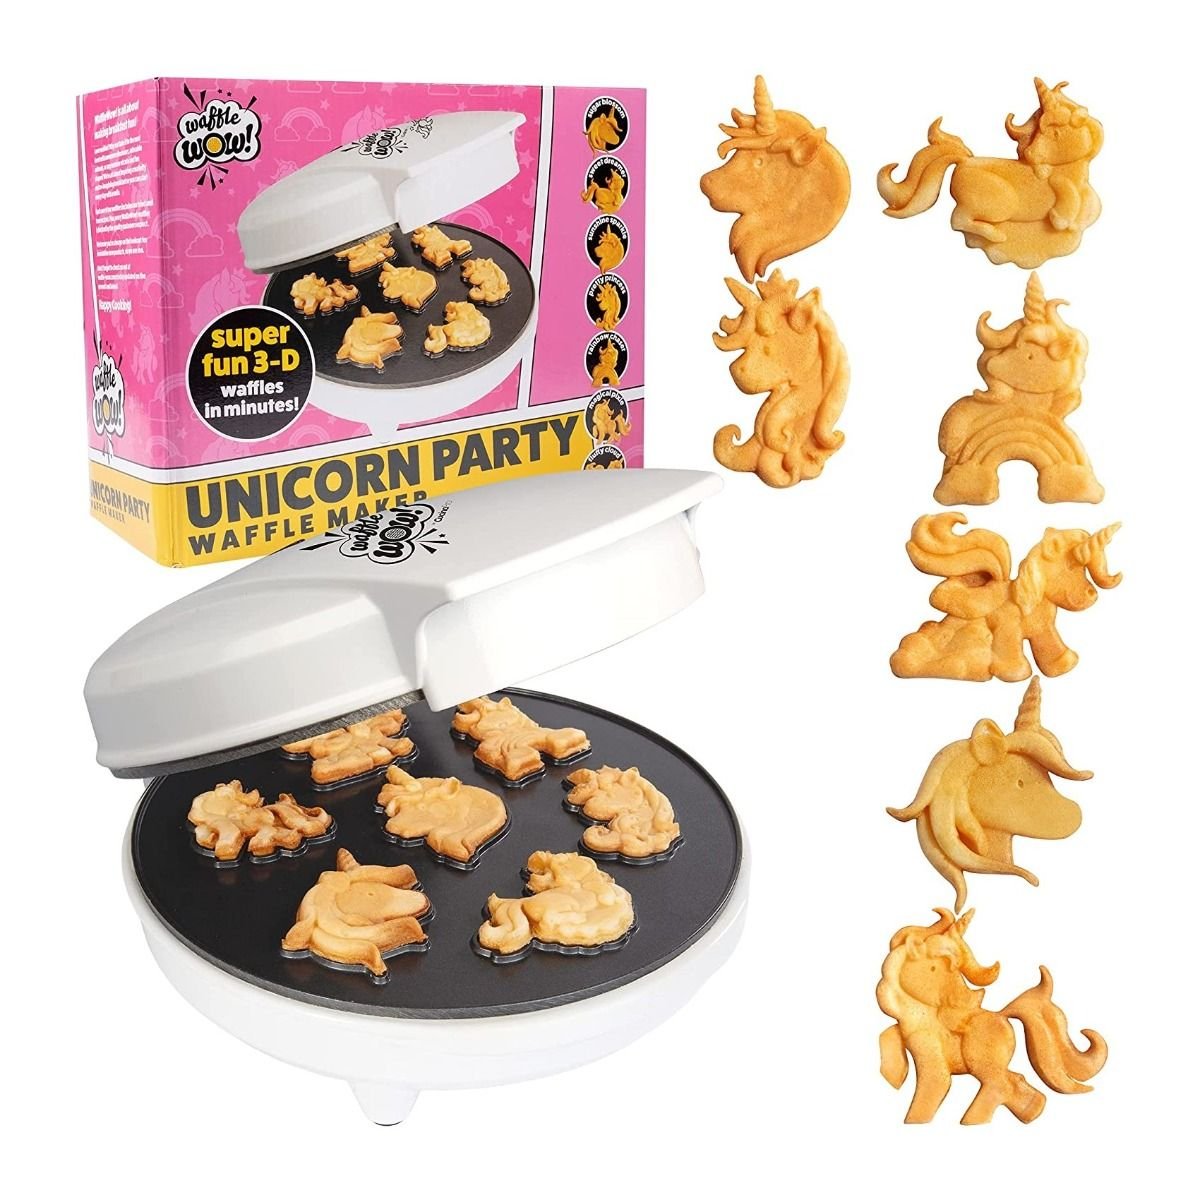 Unicorn Party Waffle Maker – Waffle Wow!